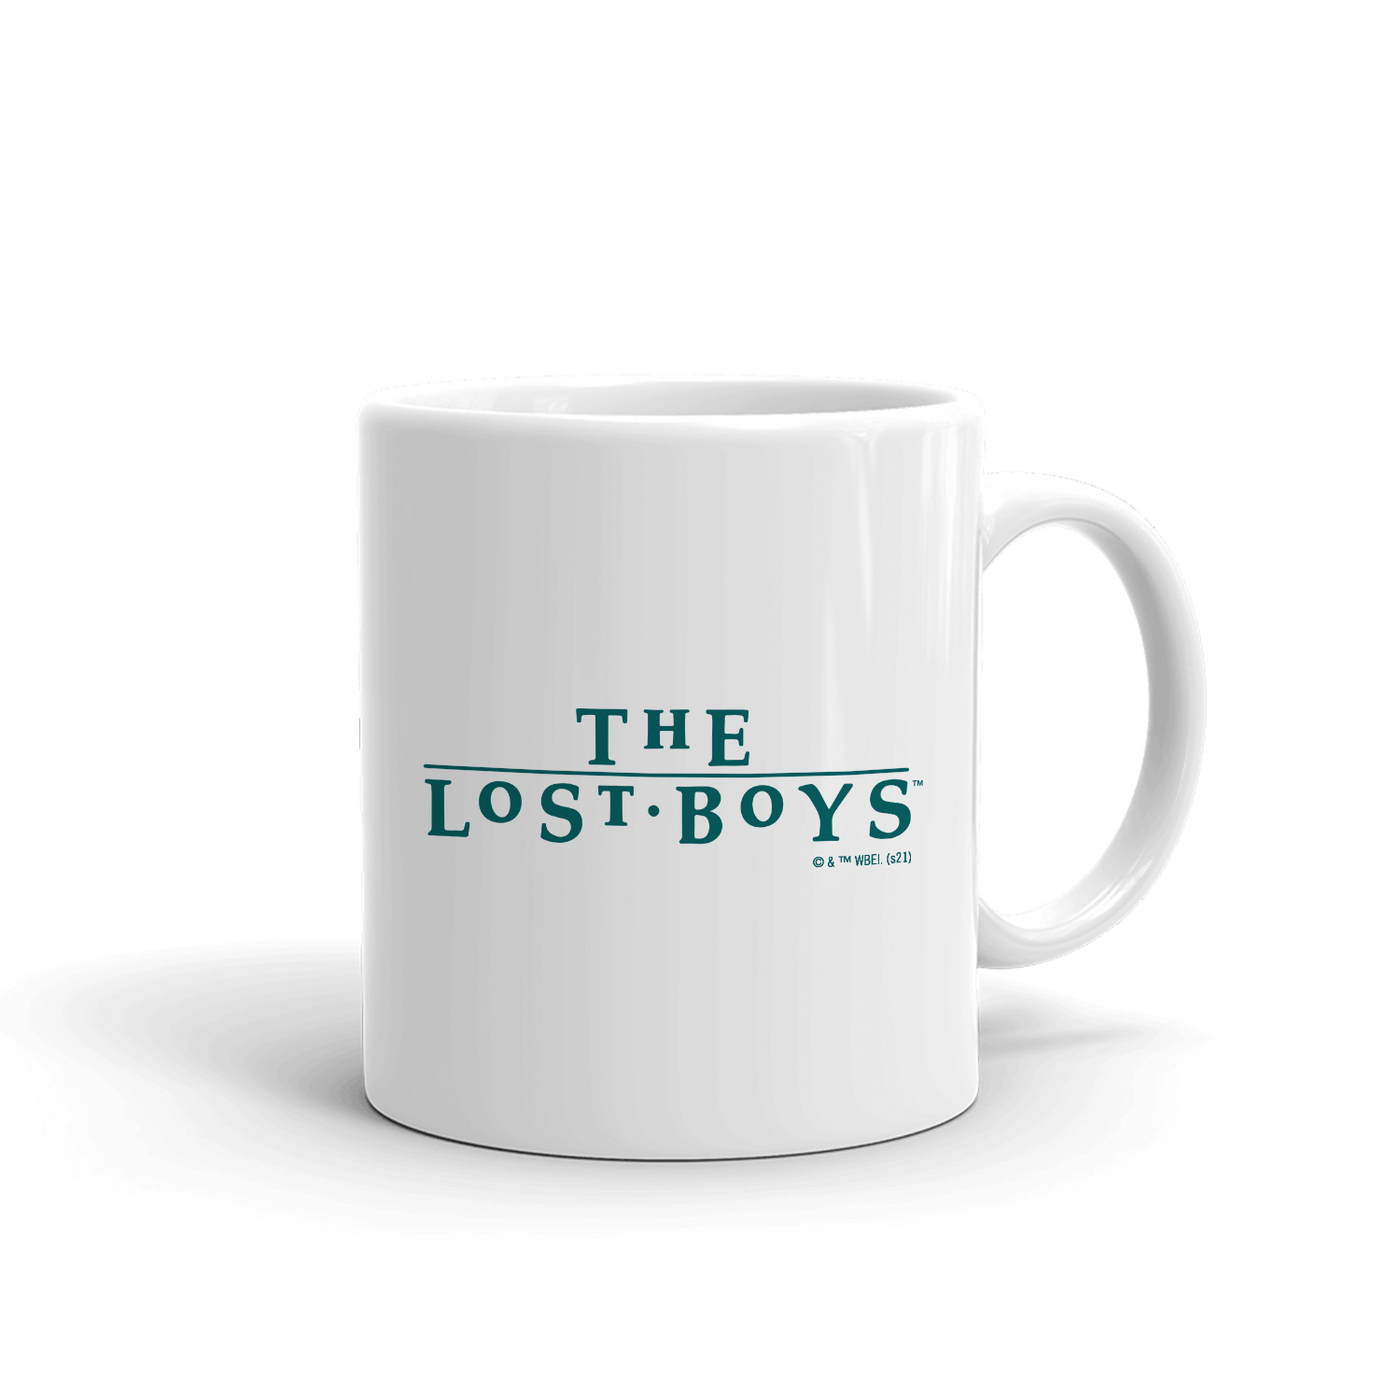 The Lost Boys Chompers White Mug